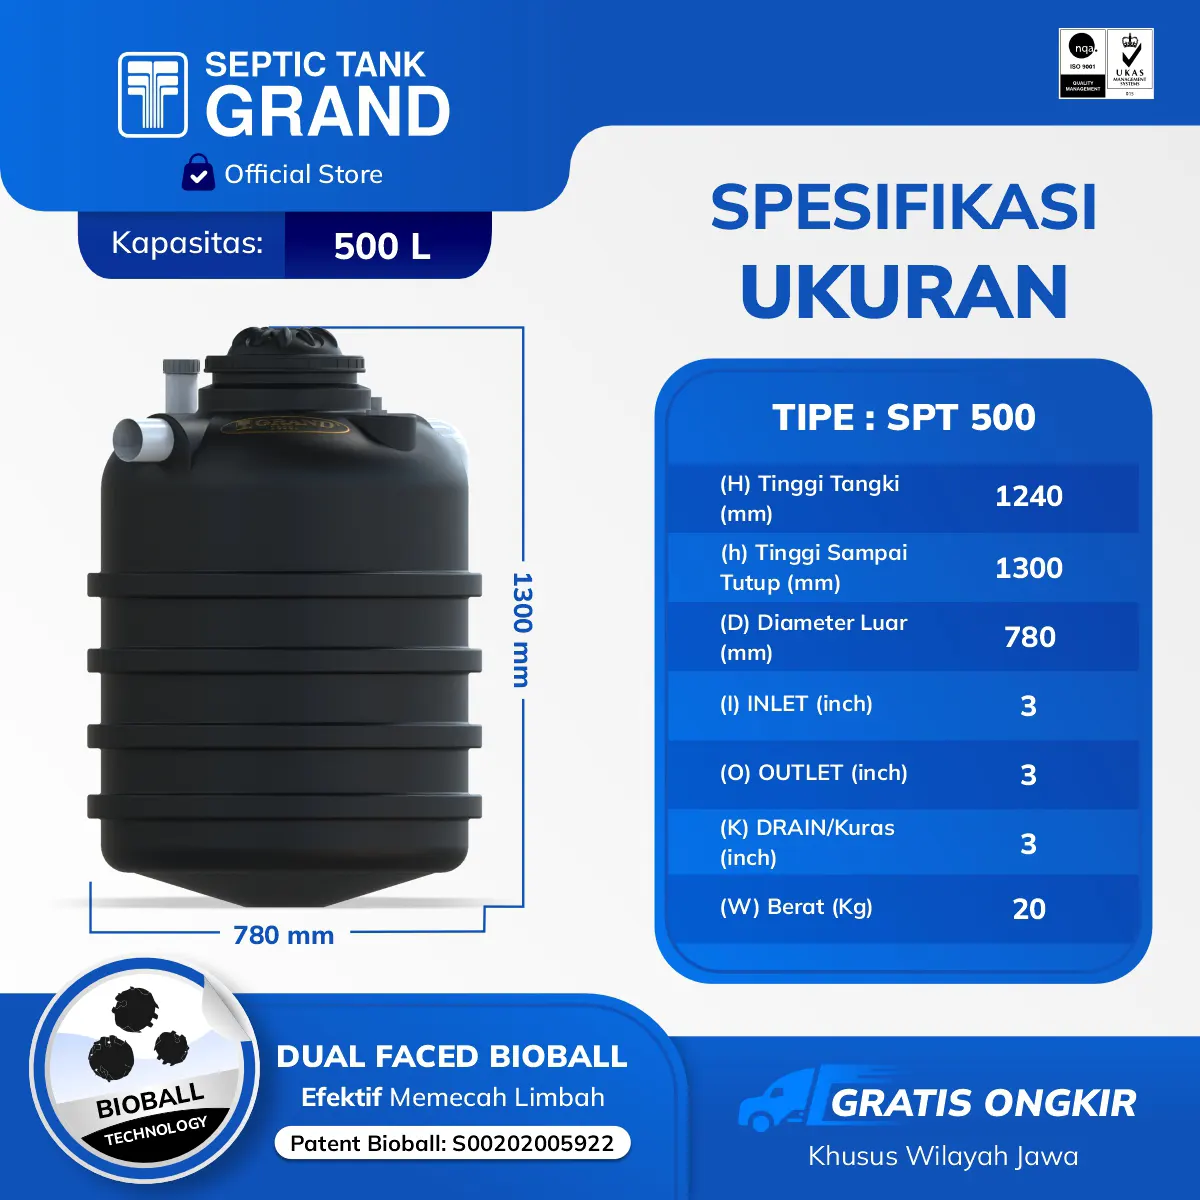 Ukuran Septic Tank Grand 500 Liter